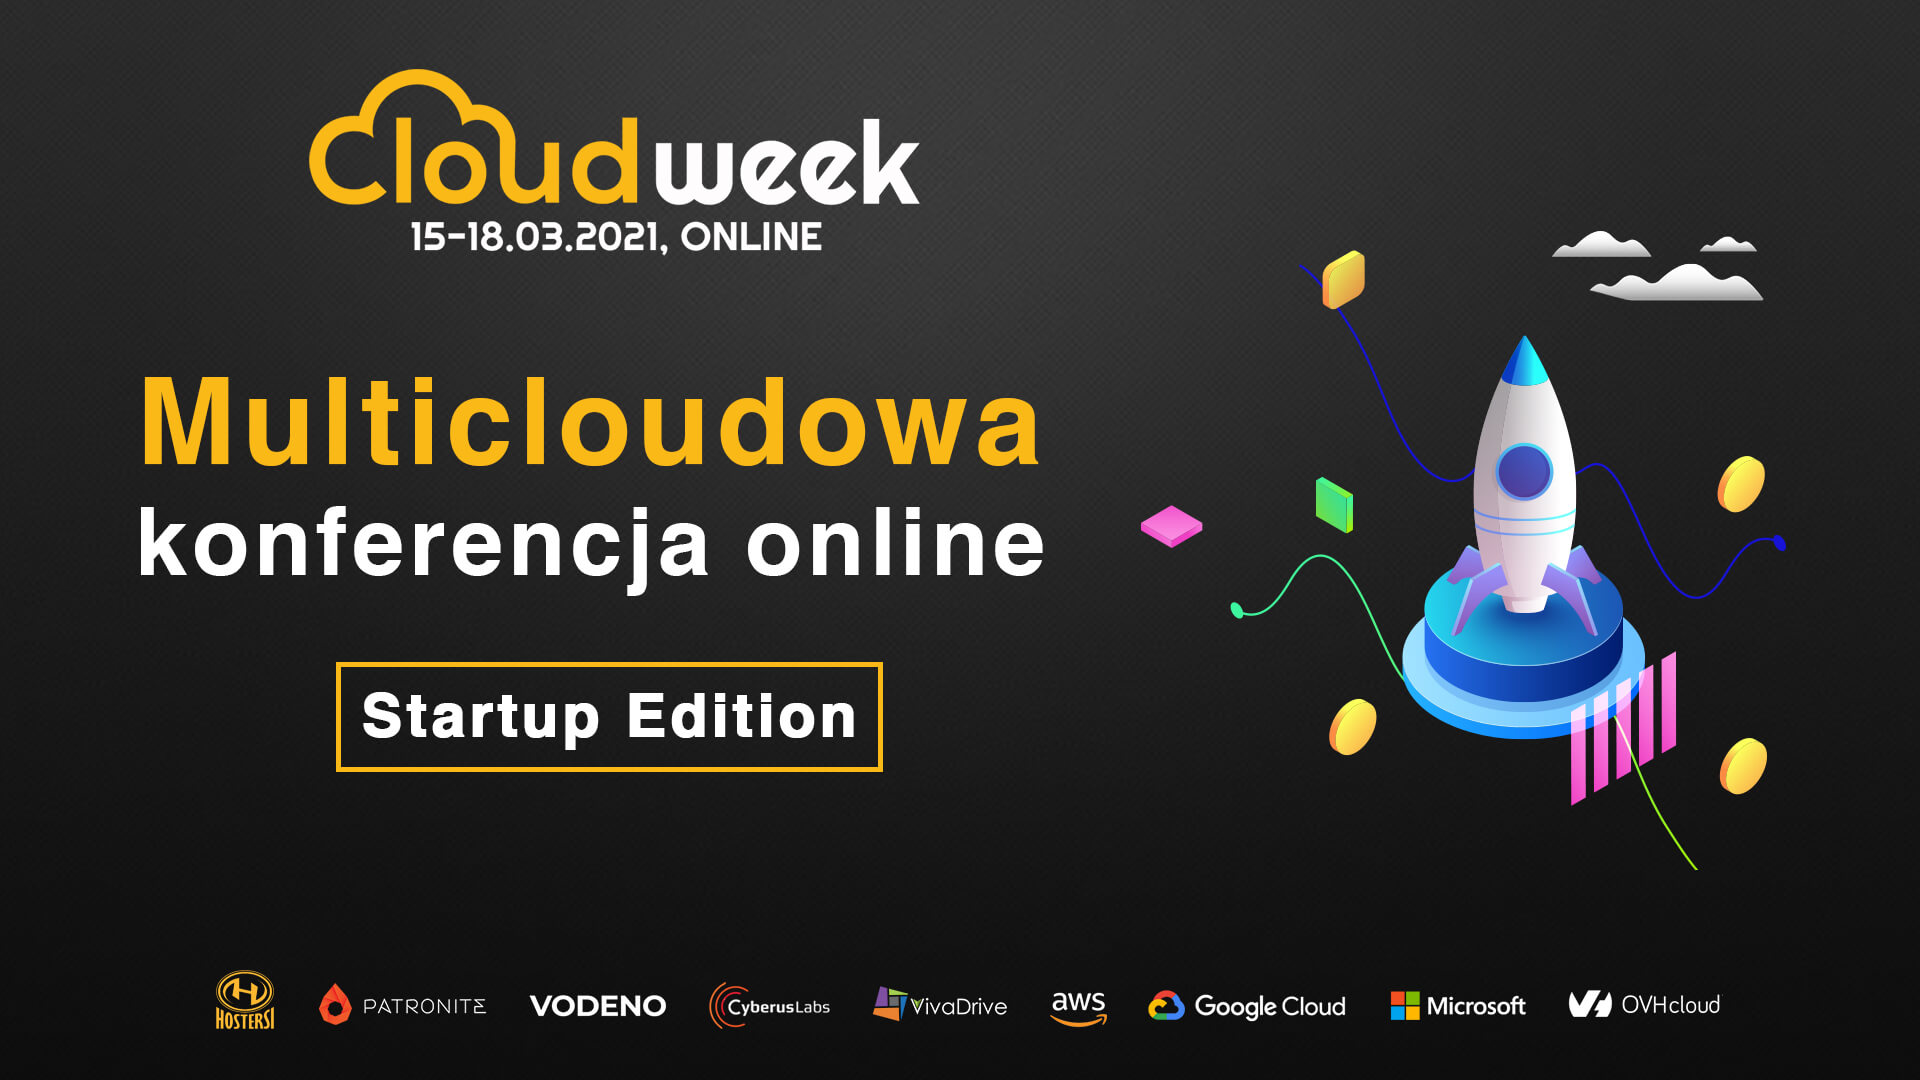 Cloud Week Startup Edition